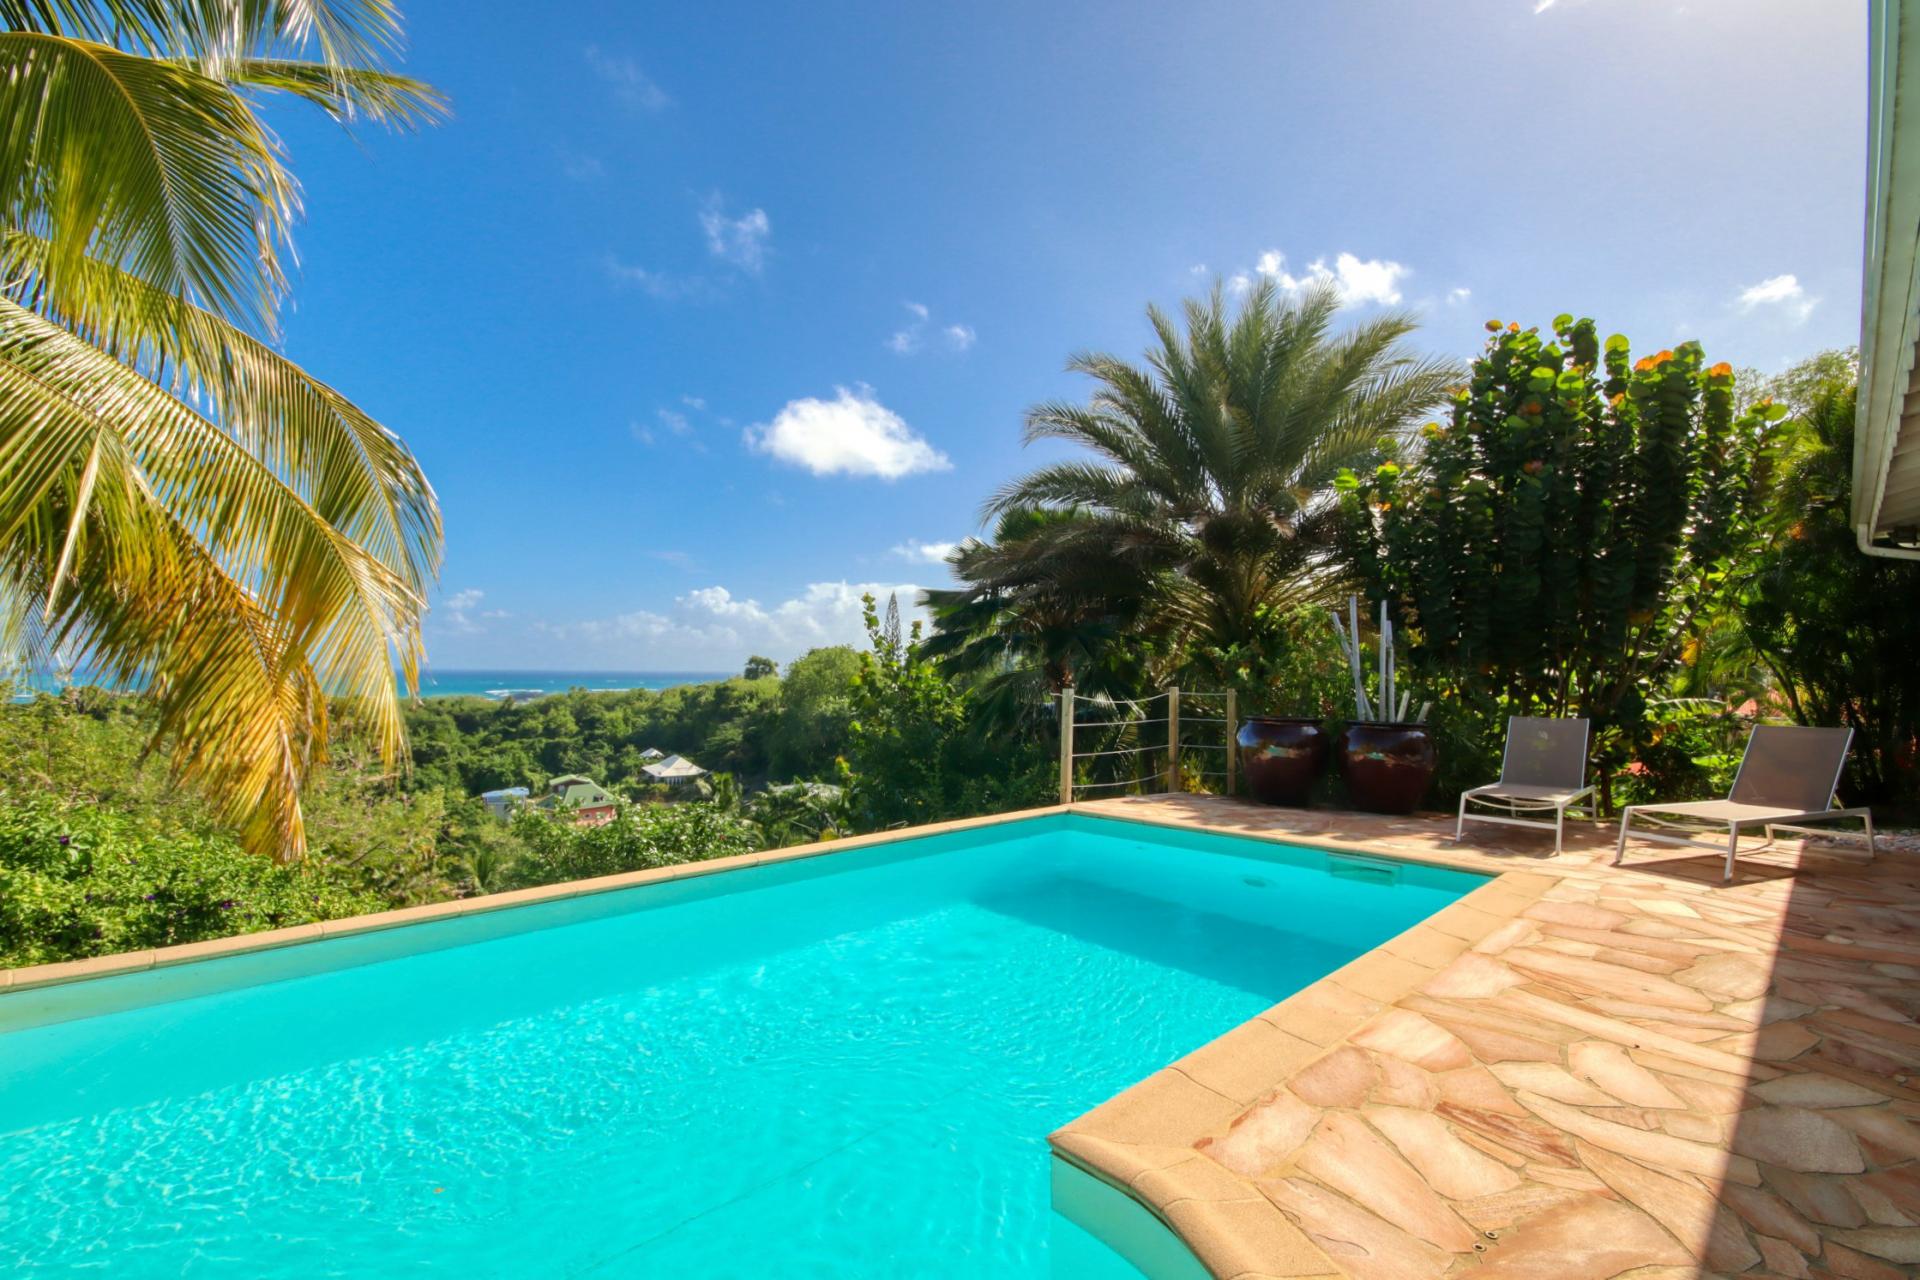 location villa martinique 3 chambres avec piscine et vue mer